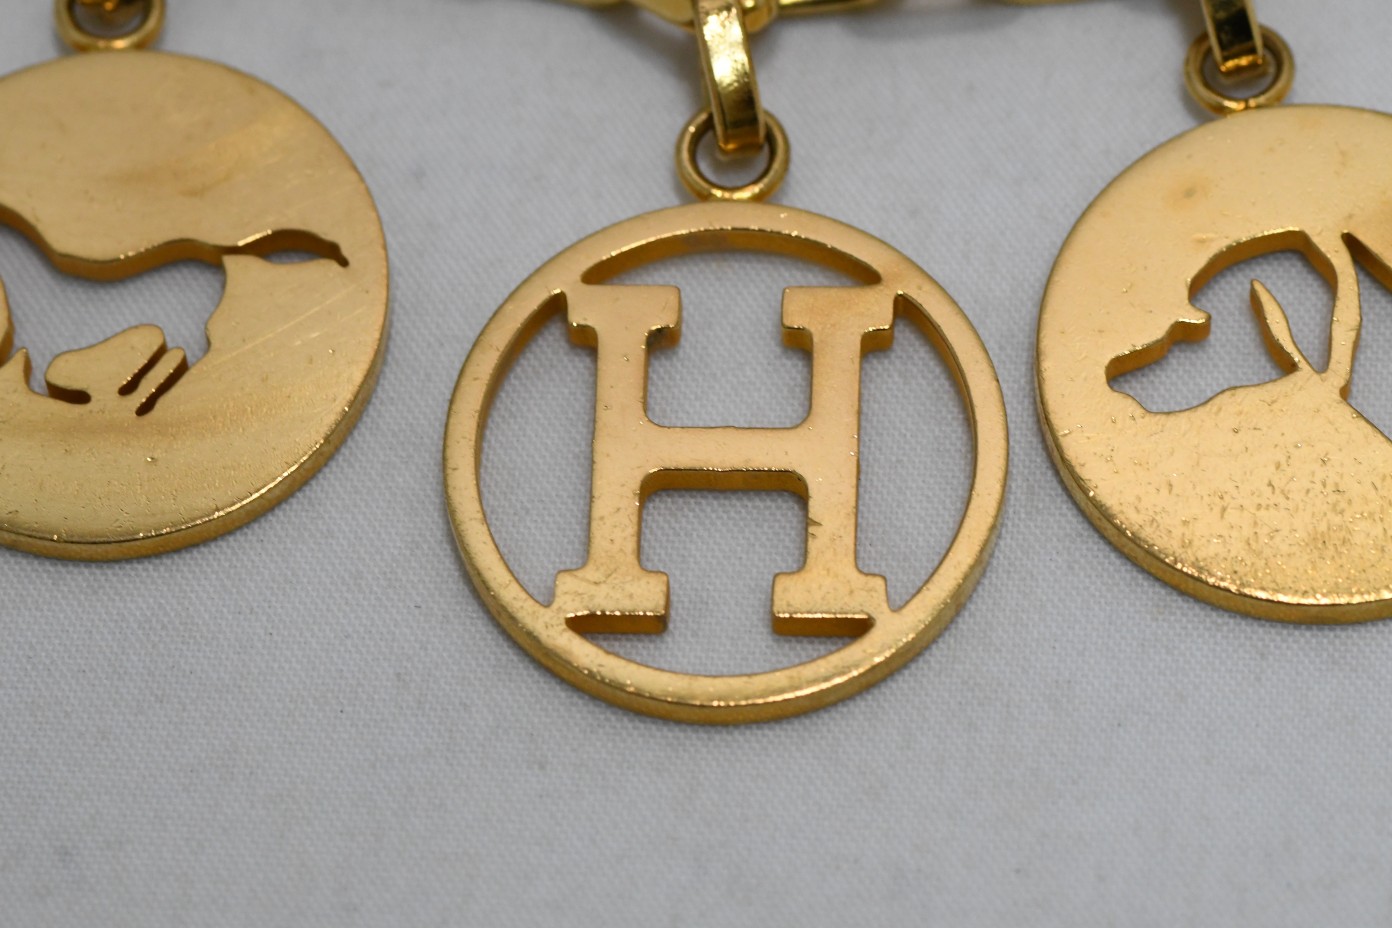 art Japan Export on X: Hermes GOLD Breloque Olga Bag Charm Amulette is in  sale now!!  #Berloque #Breloque #Cadena #Hermes  #Olga #charm #Amulette  / X